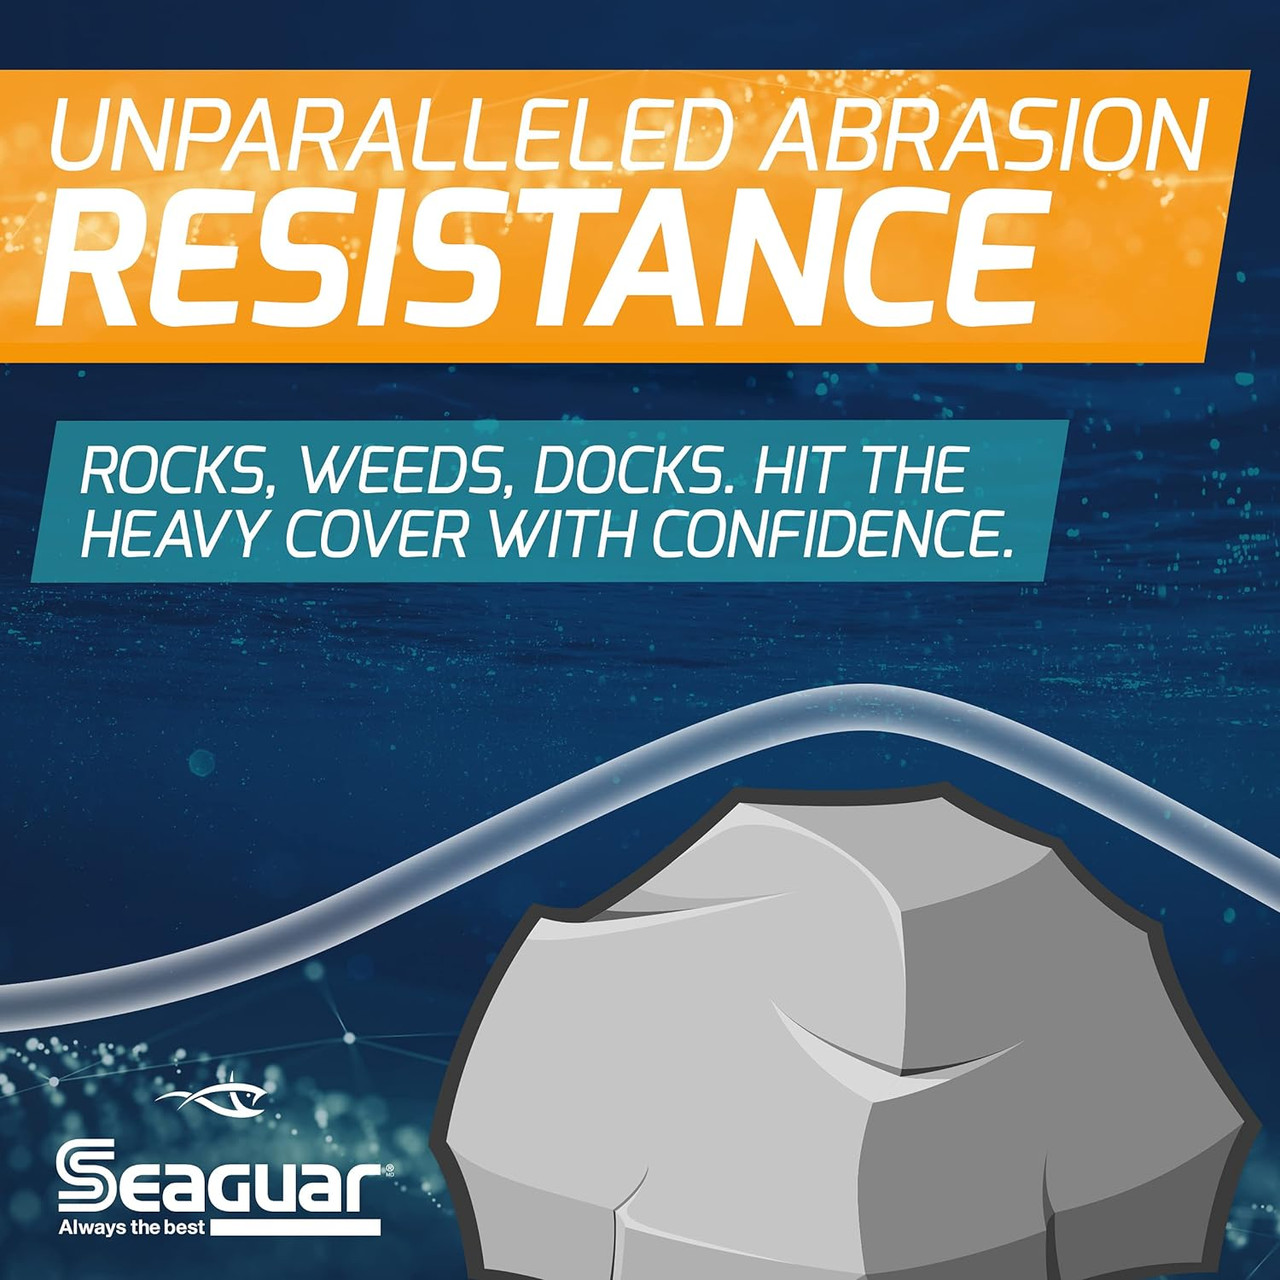 Seaguar AbrazX Abrasion Resistant 100% Fluorocarbon Leader 200yd/183m 8LB